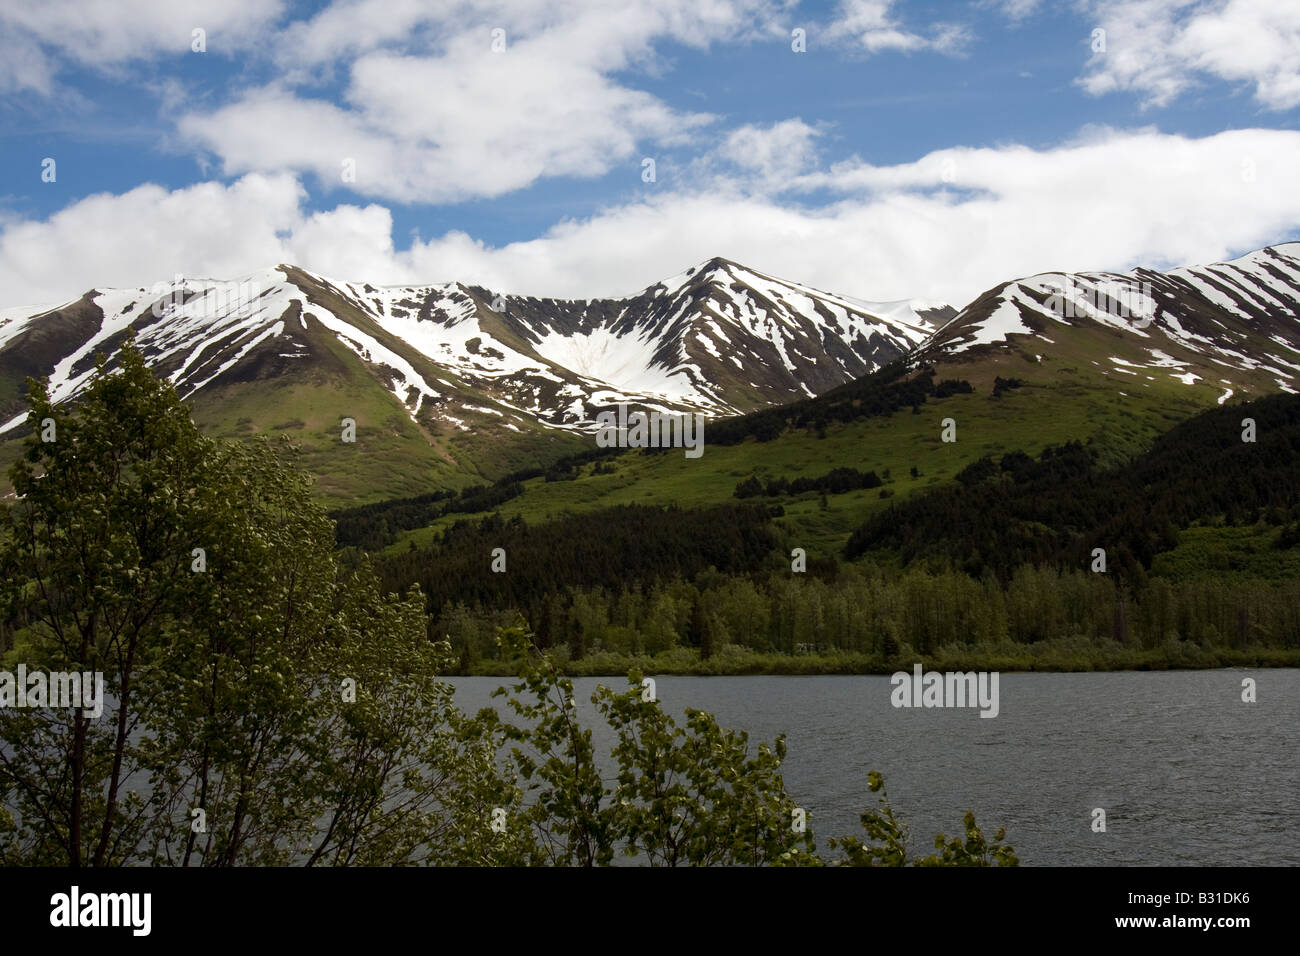 Coperta di neve in alta montagna in Alaska Foto Stock